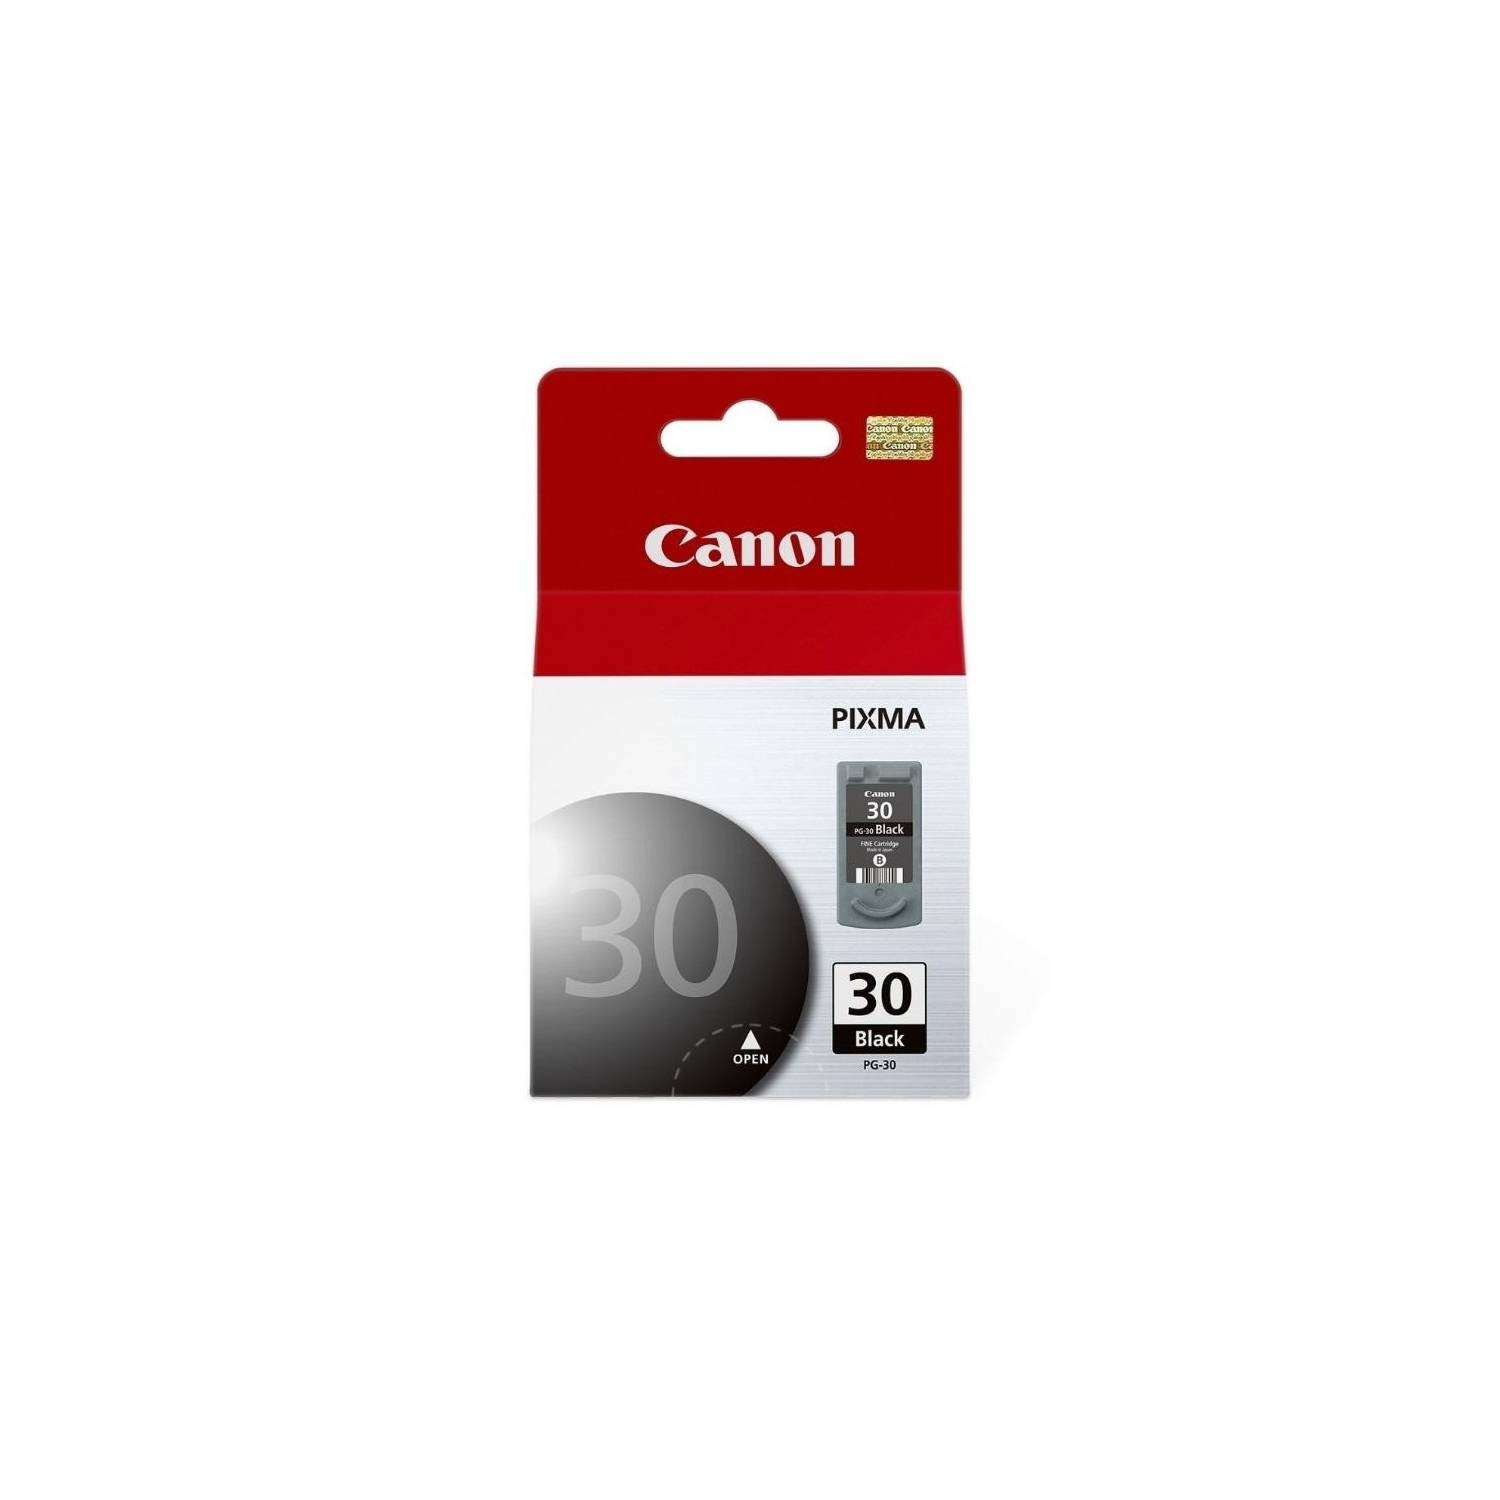 Canon - Print cartridge - PG-30 LAM Fine black